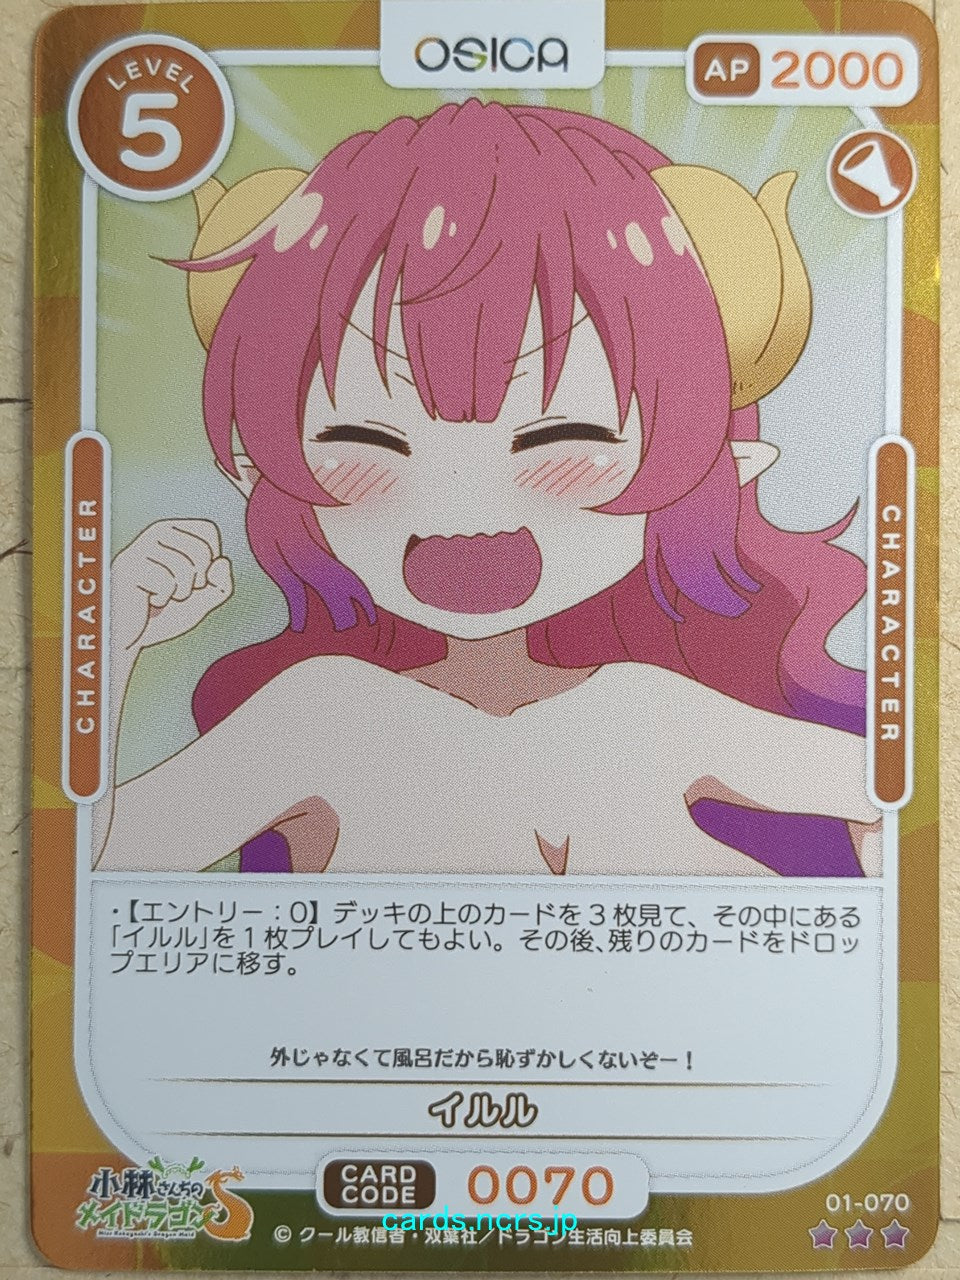 OSICA Miss Kobayashi's Dragon Maid -Ilulu-   Trading Card OS/KOB-01-070F